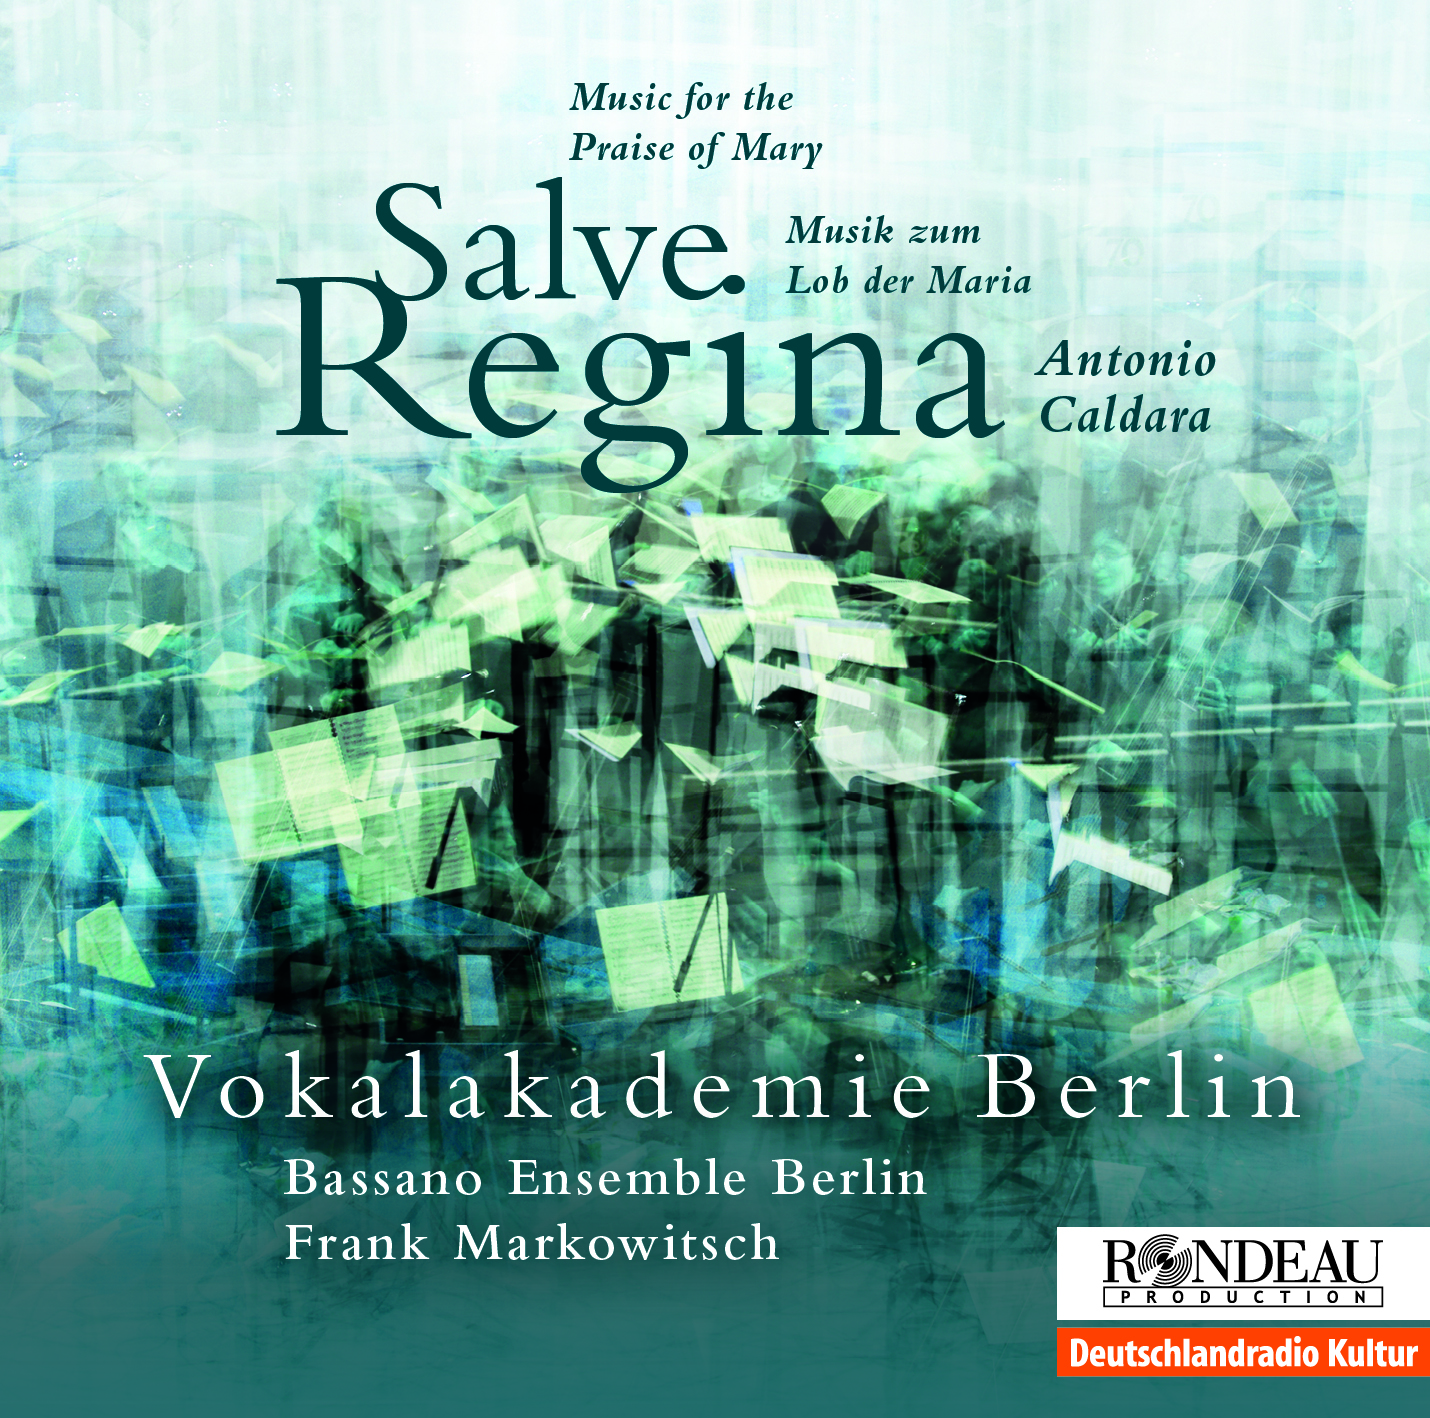 Salve Regina – New CD Release with Works by Antonio Caldara